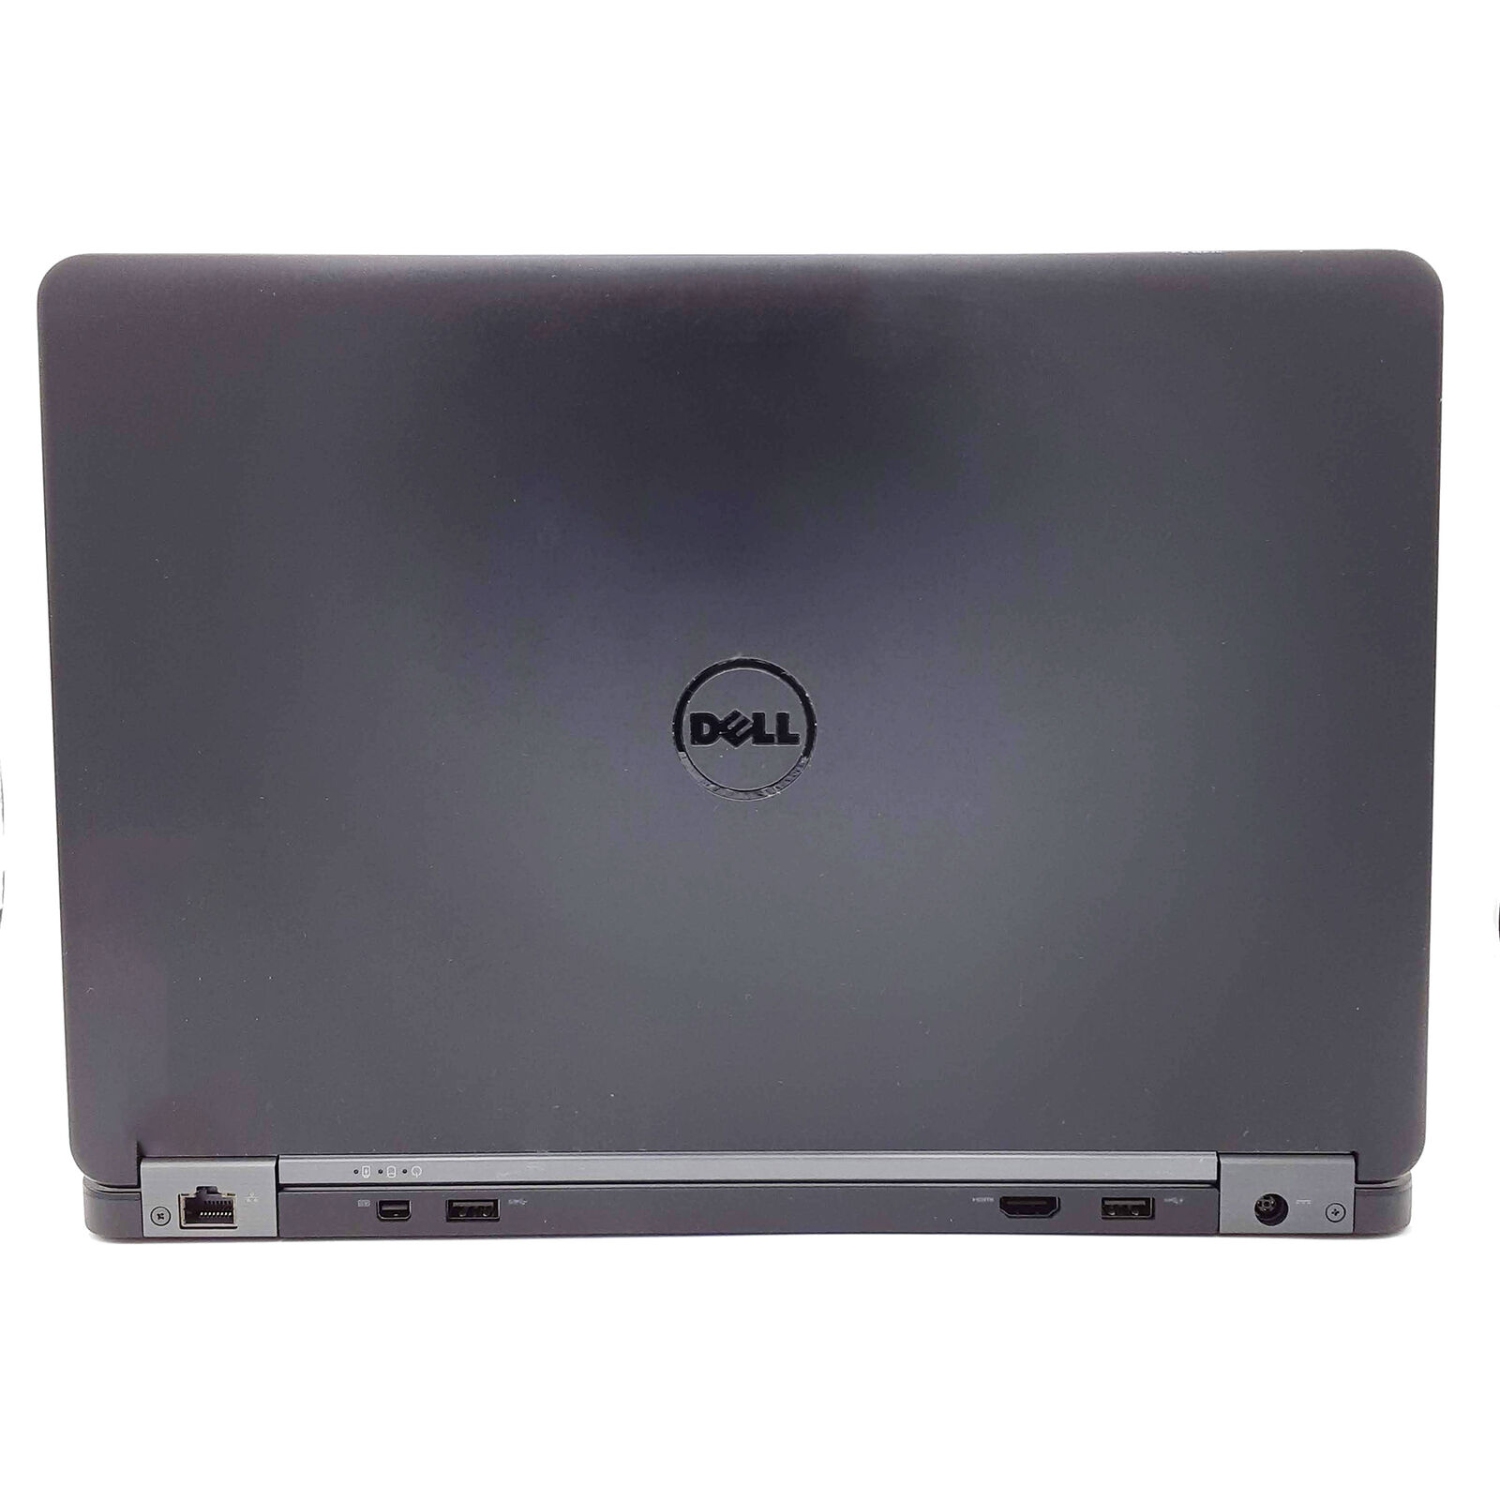 Refurbished (Good) - Dell Latitude E7470 Intel core i5 Laptop with 8gb RAM 240gb SSD W10 PRO